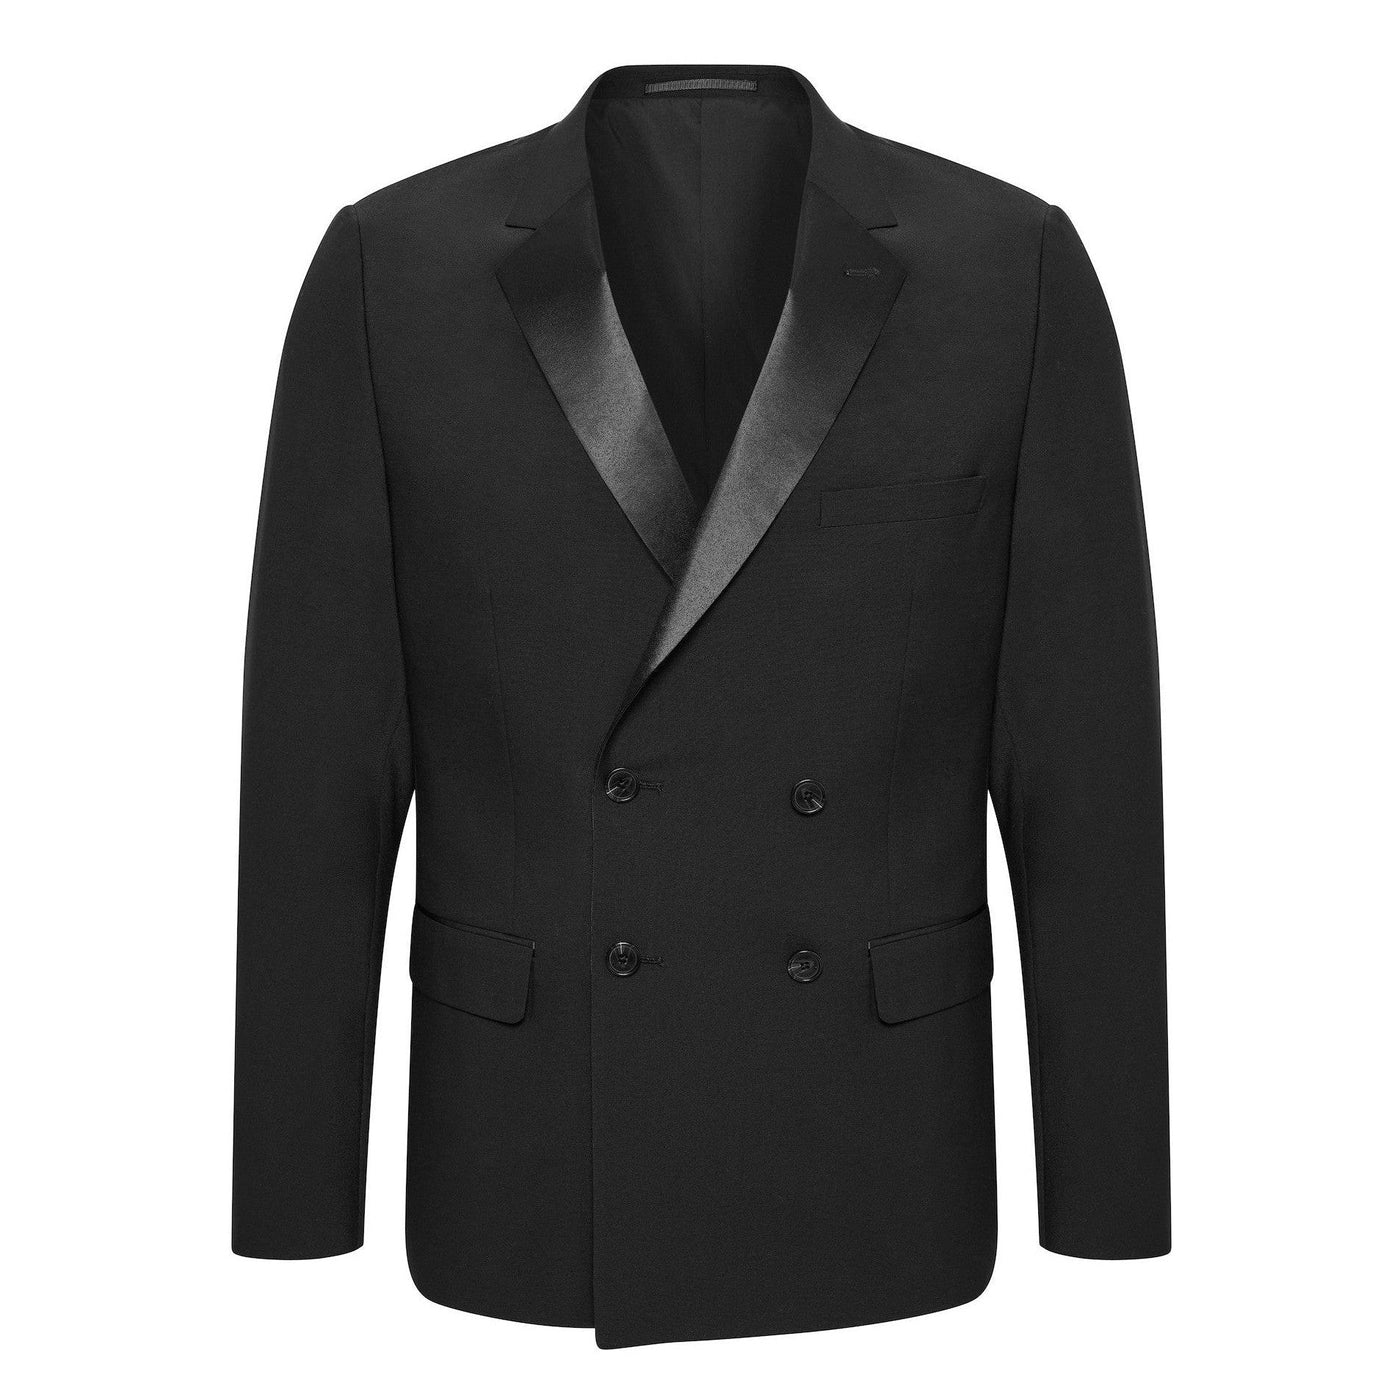 Gotstyle Fashion - Matinique Tuxedo Double Breasted Notch Lapel Tuxedo Blazer - Black